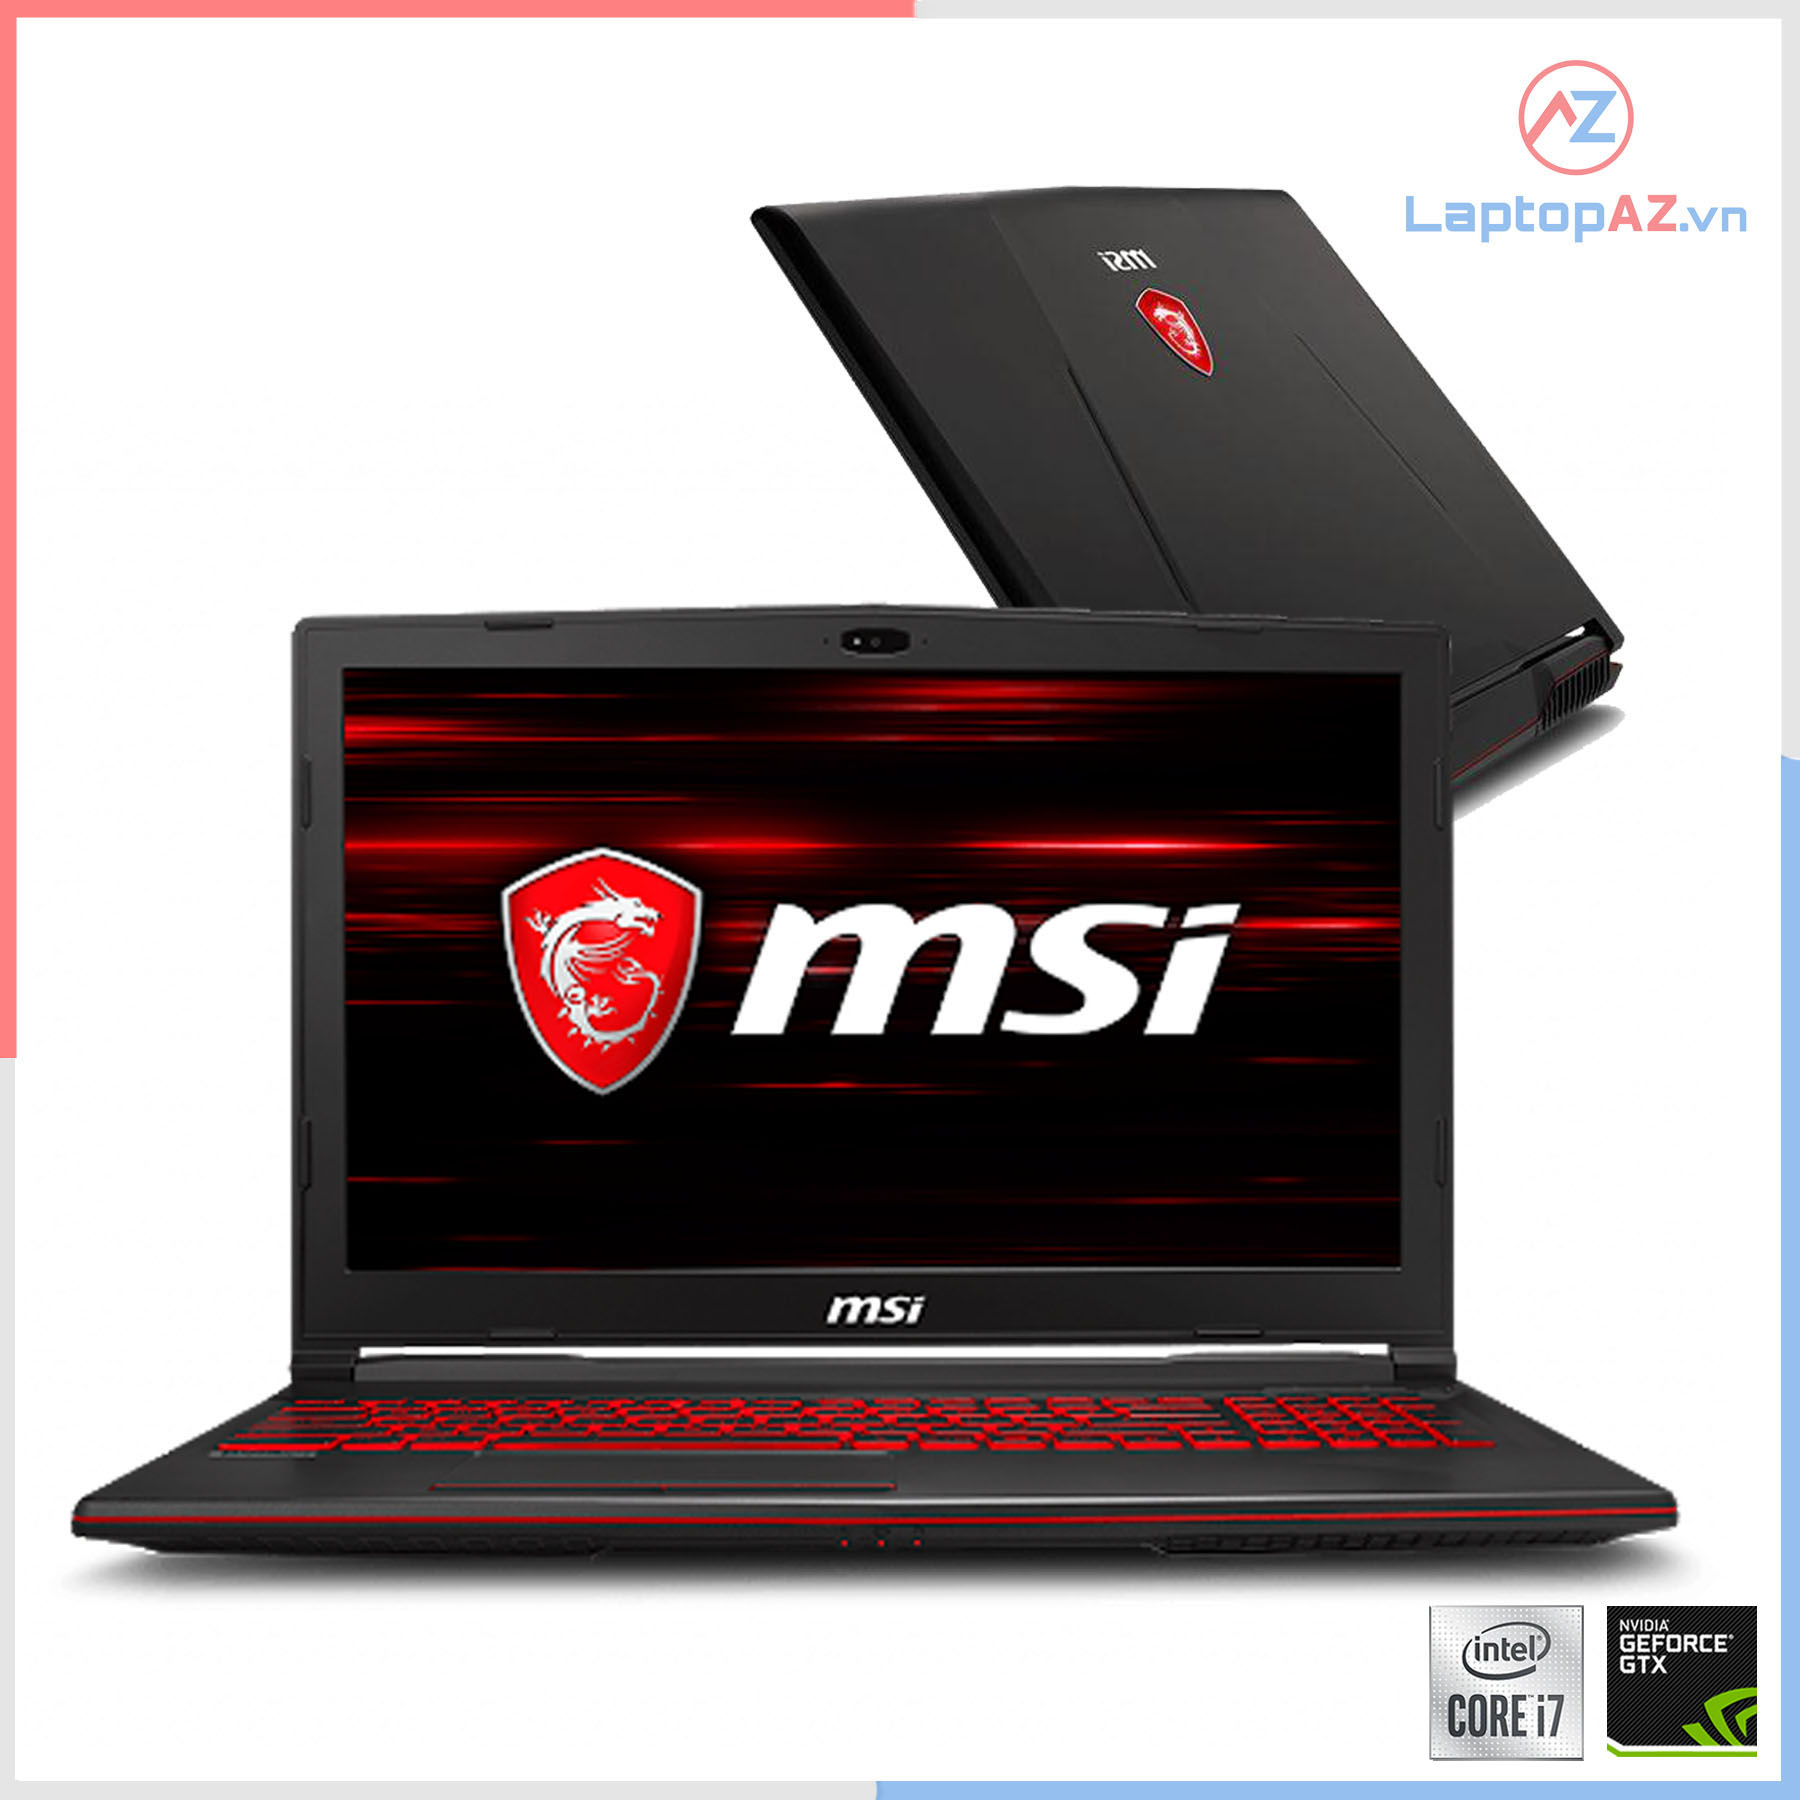 Laptop MSI GL63 (Core i7-8750H, 8GB, 128GB + 1TB, VGA 6GB GTX 1060, 15.6 inch FHD)